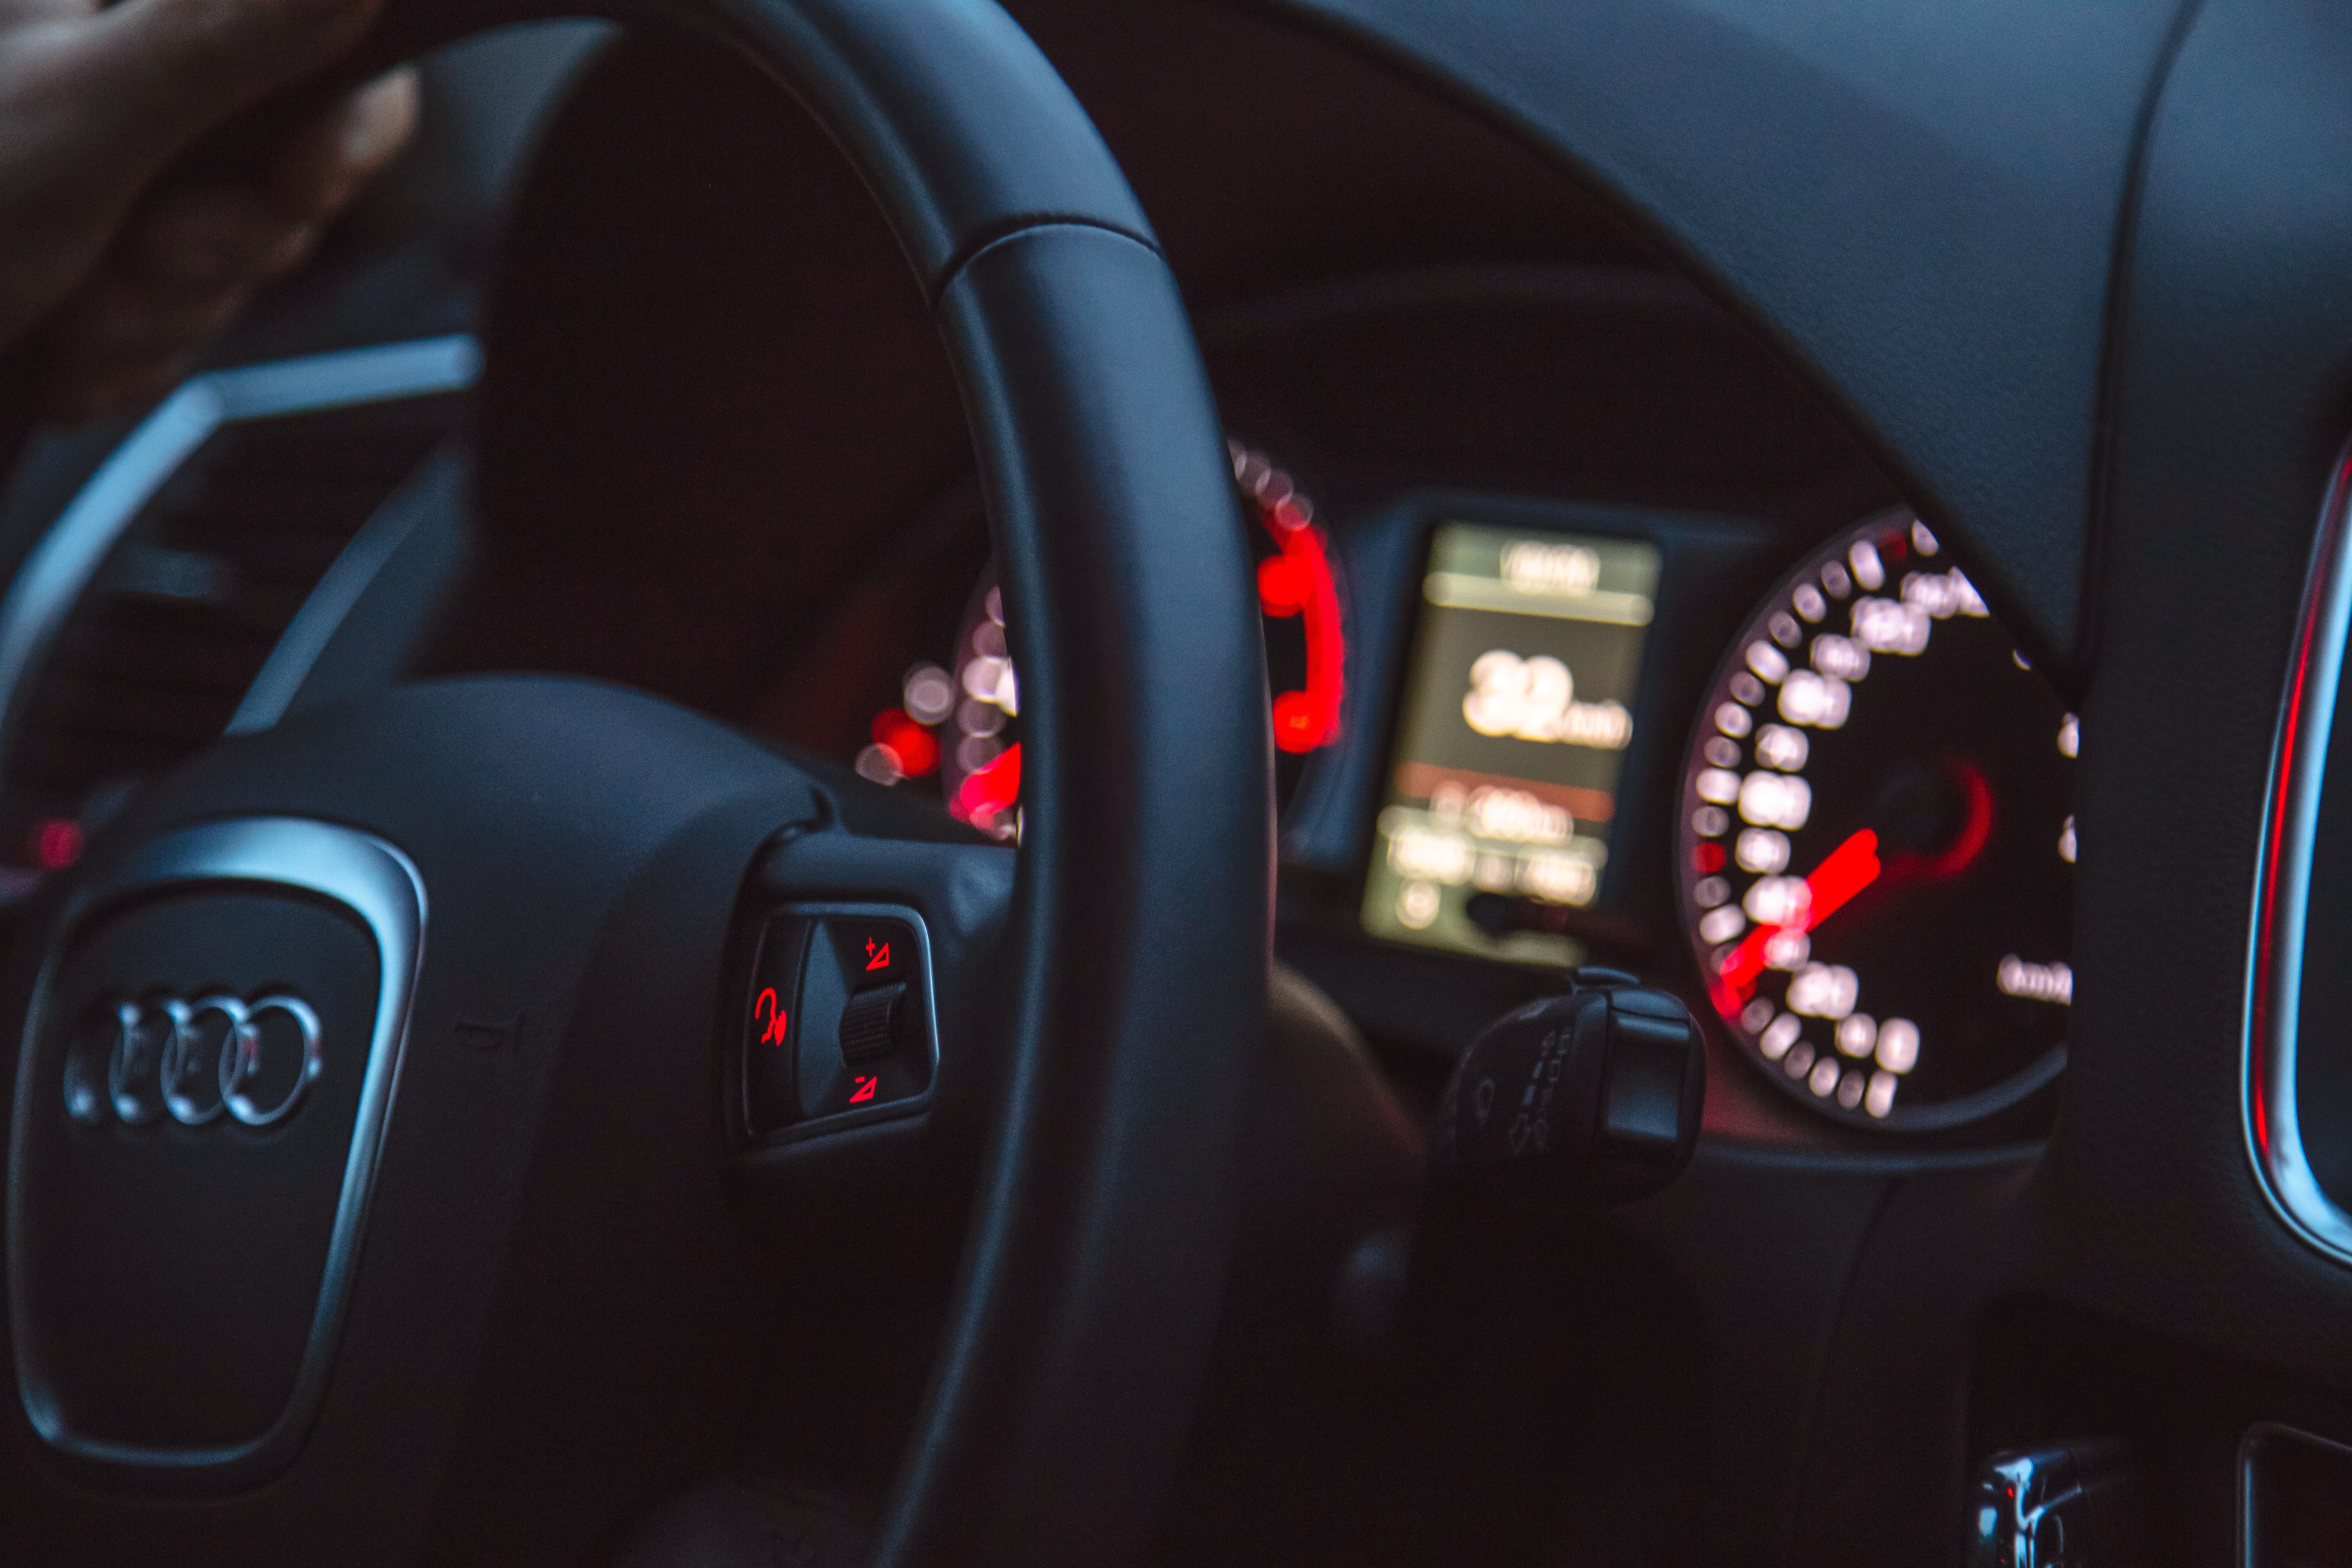 Audi Steering Wheel Tachometer 5472x3648